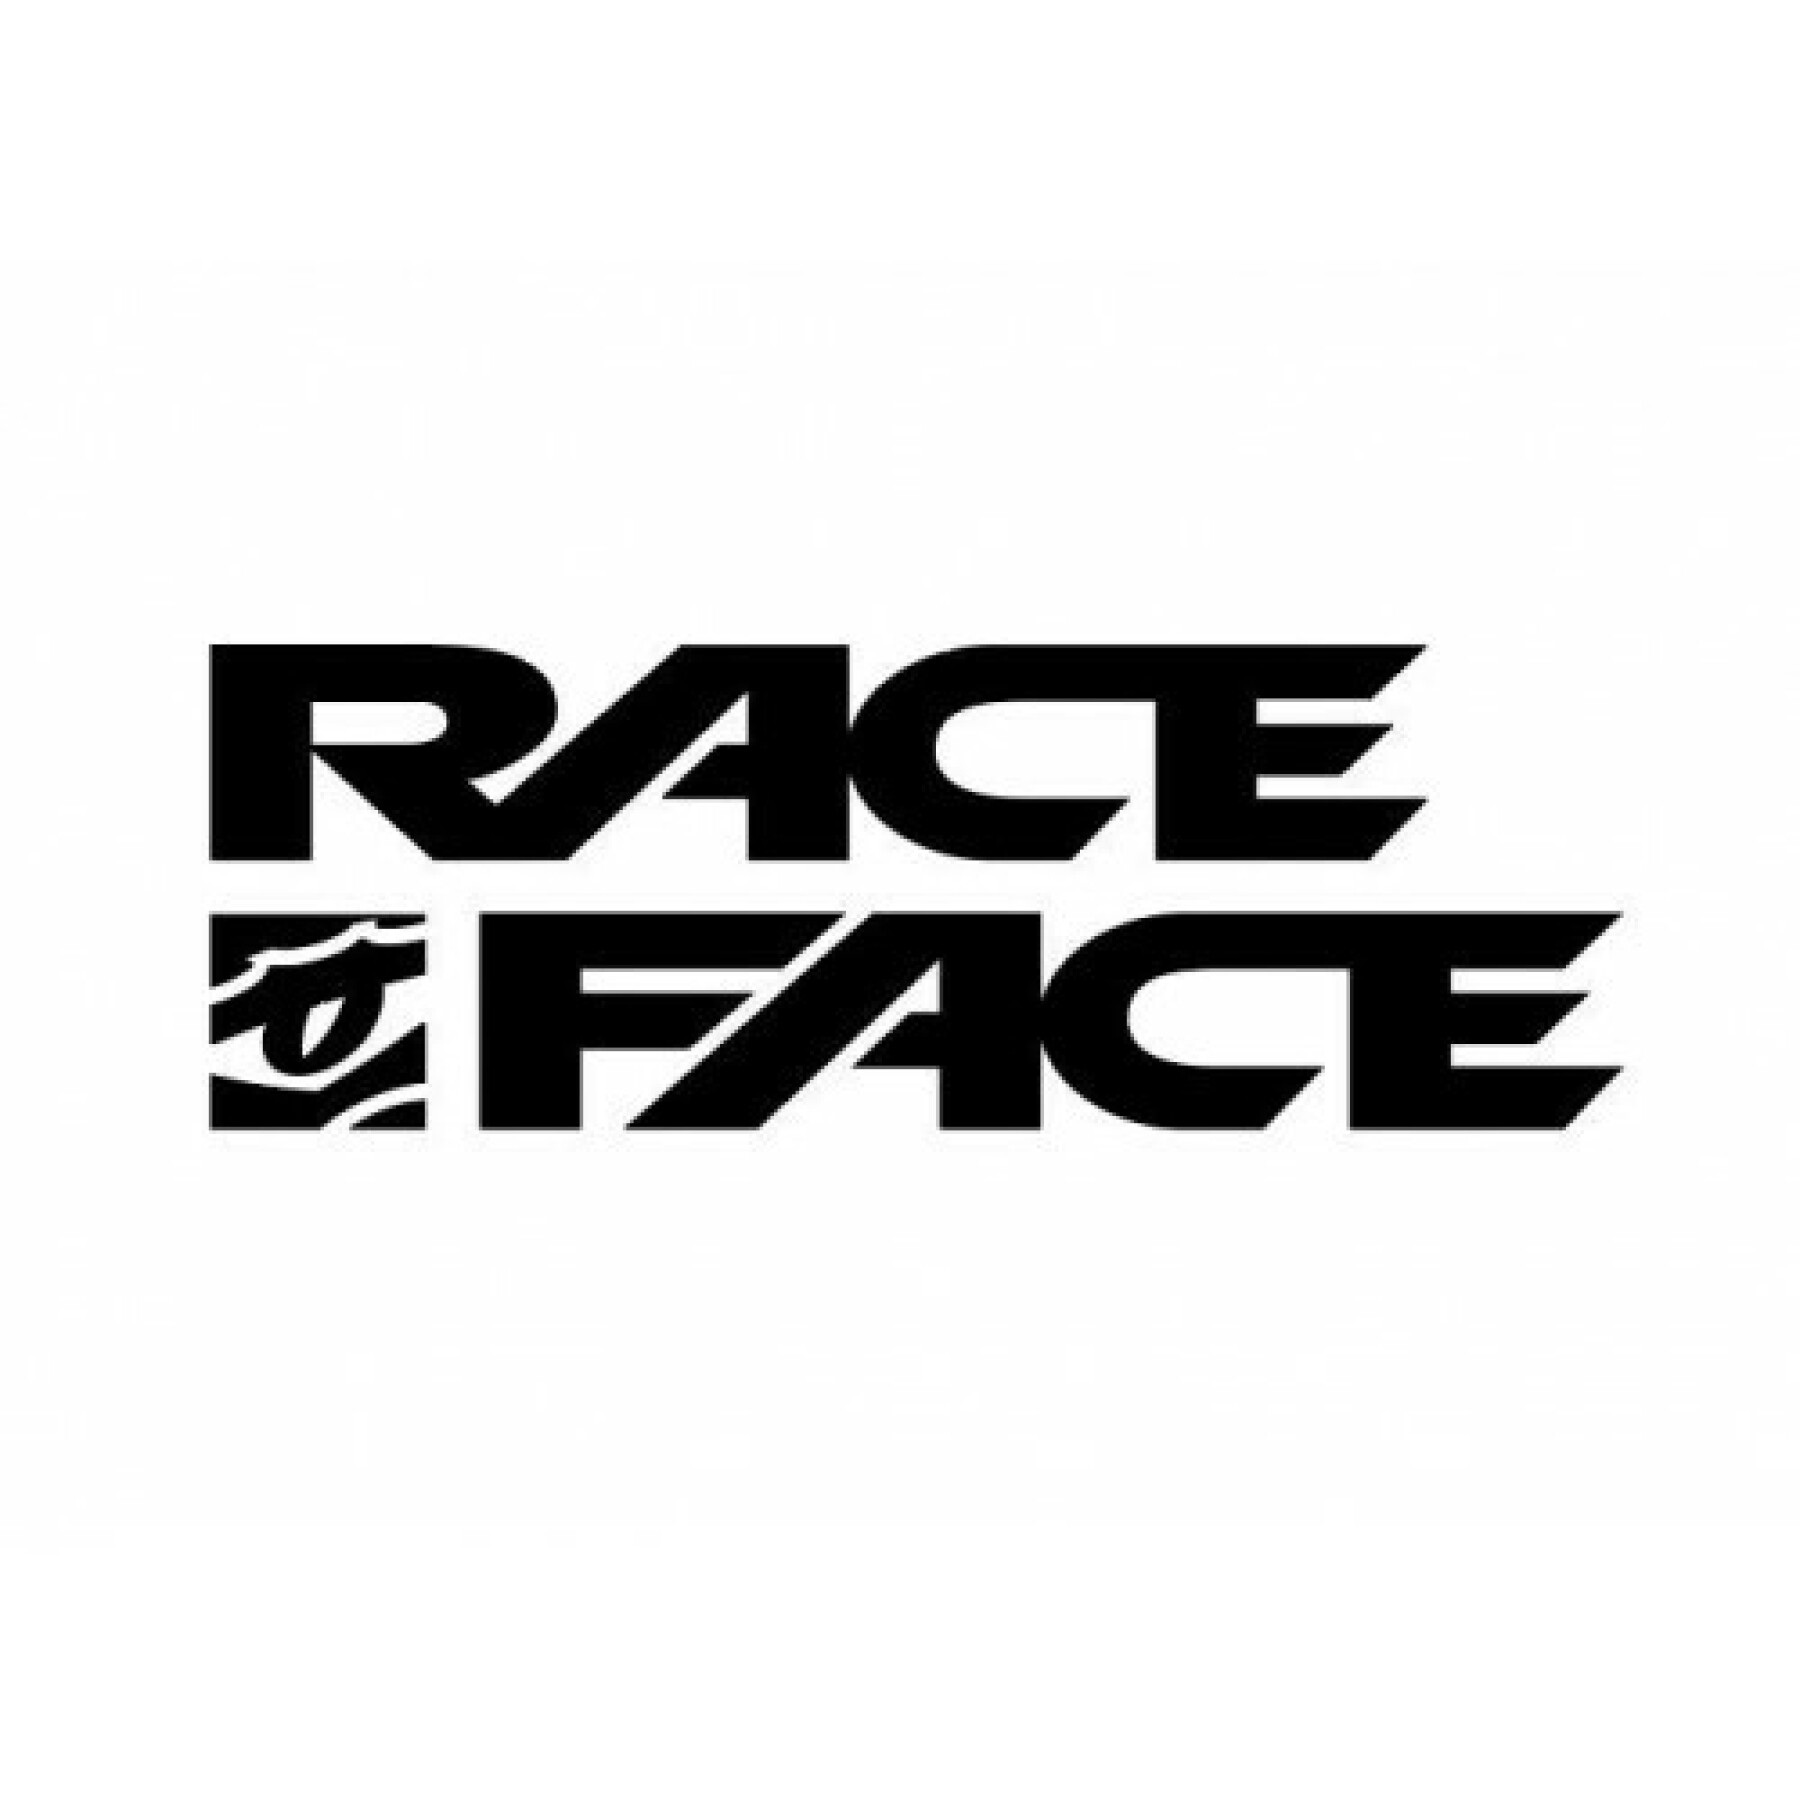 Orla Race Face arc offset - 35 - 27.5 - 32t